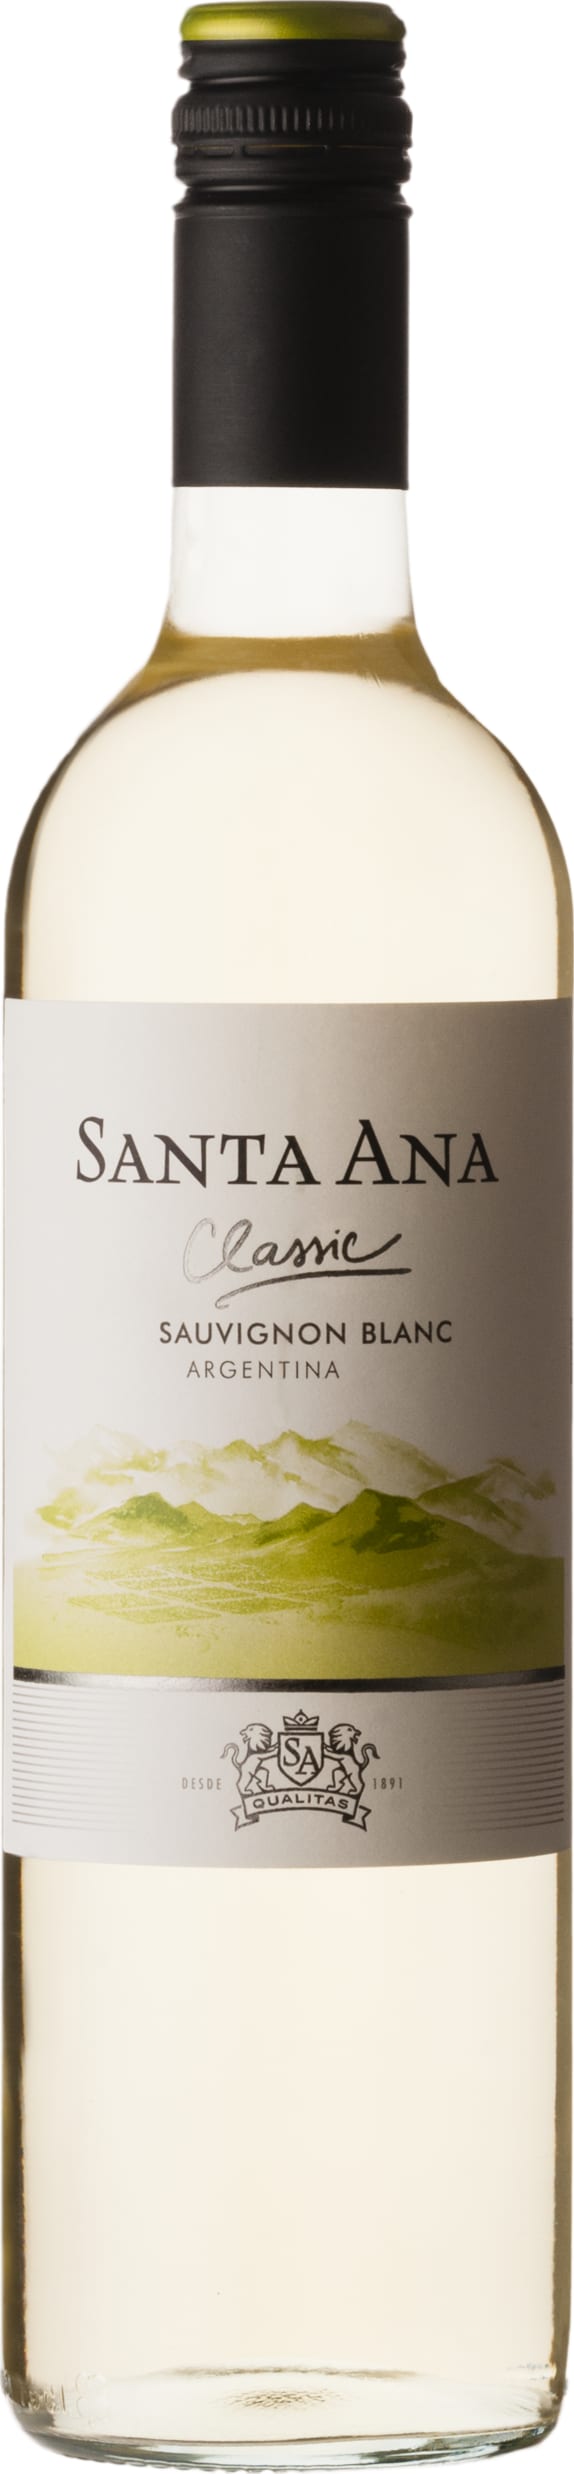 Santa Ana Sauvignon Blanc 2022 75cl - Buy Santa Ana Wines from GREAT WINES DIRECT wine shop